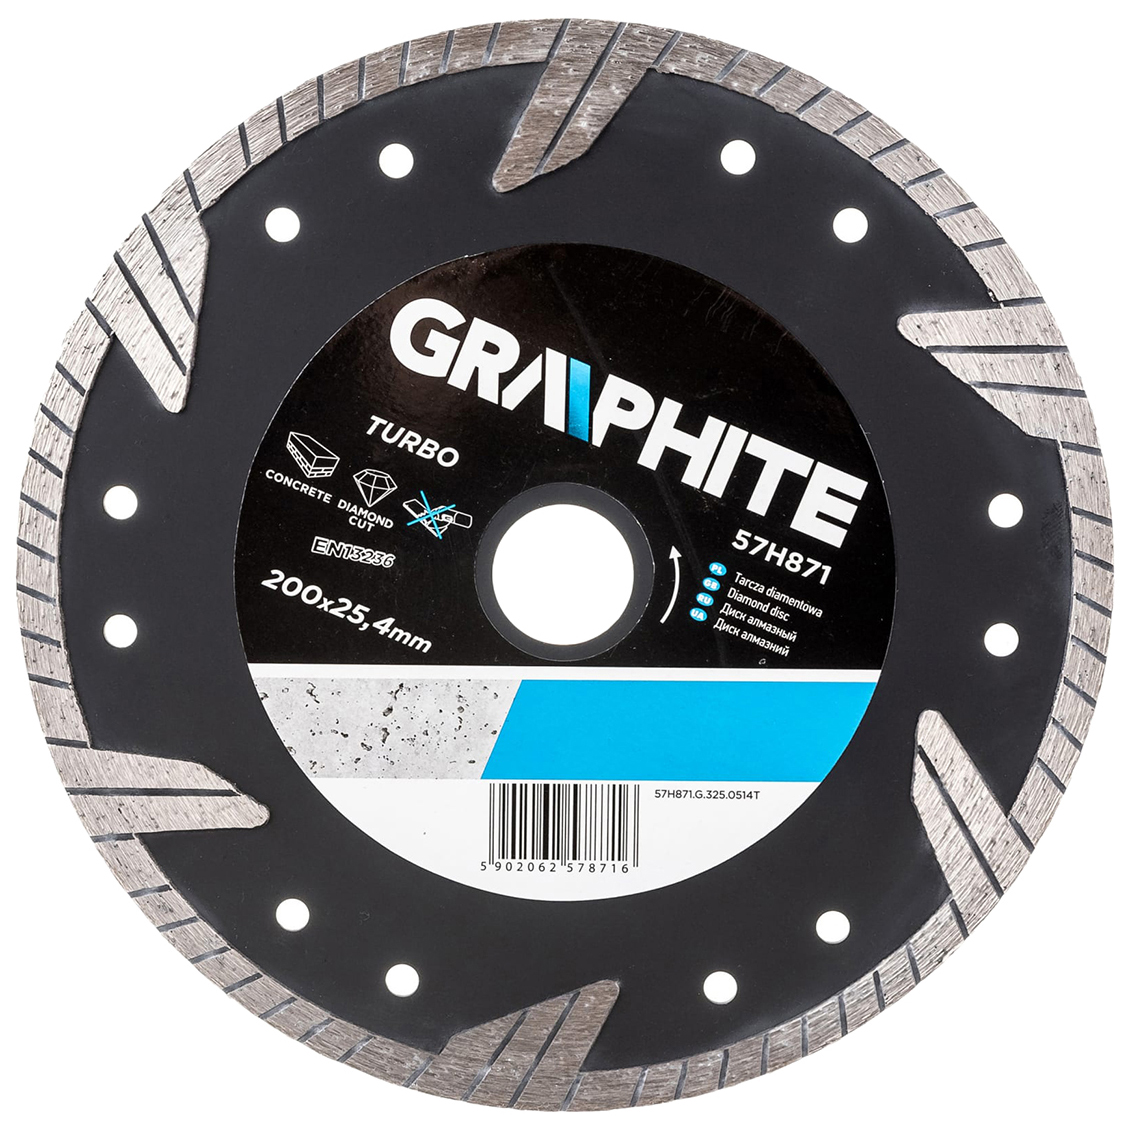 фото Graphite диск алмазный 200 x 25.4мм turbo 57h871